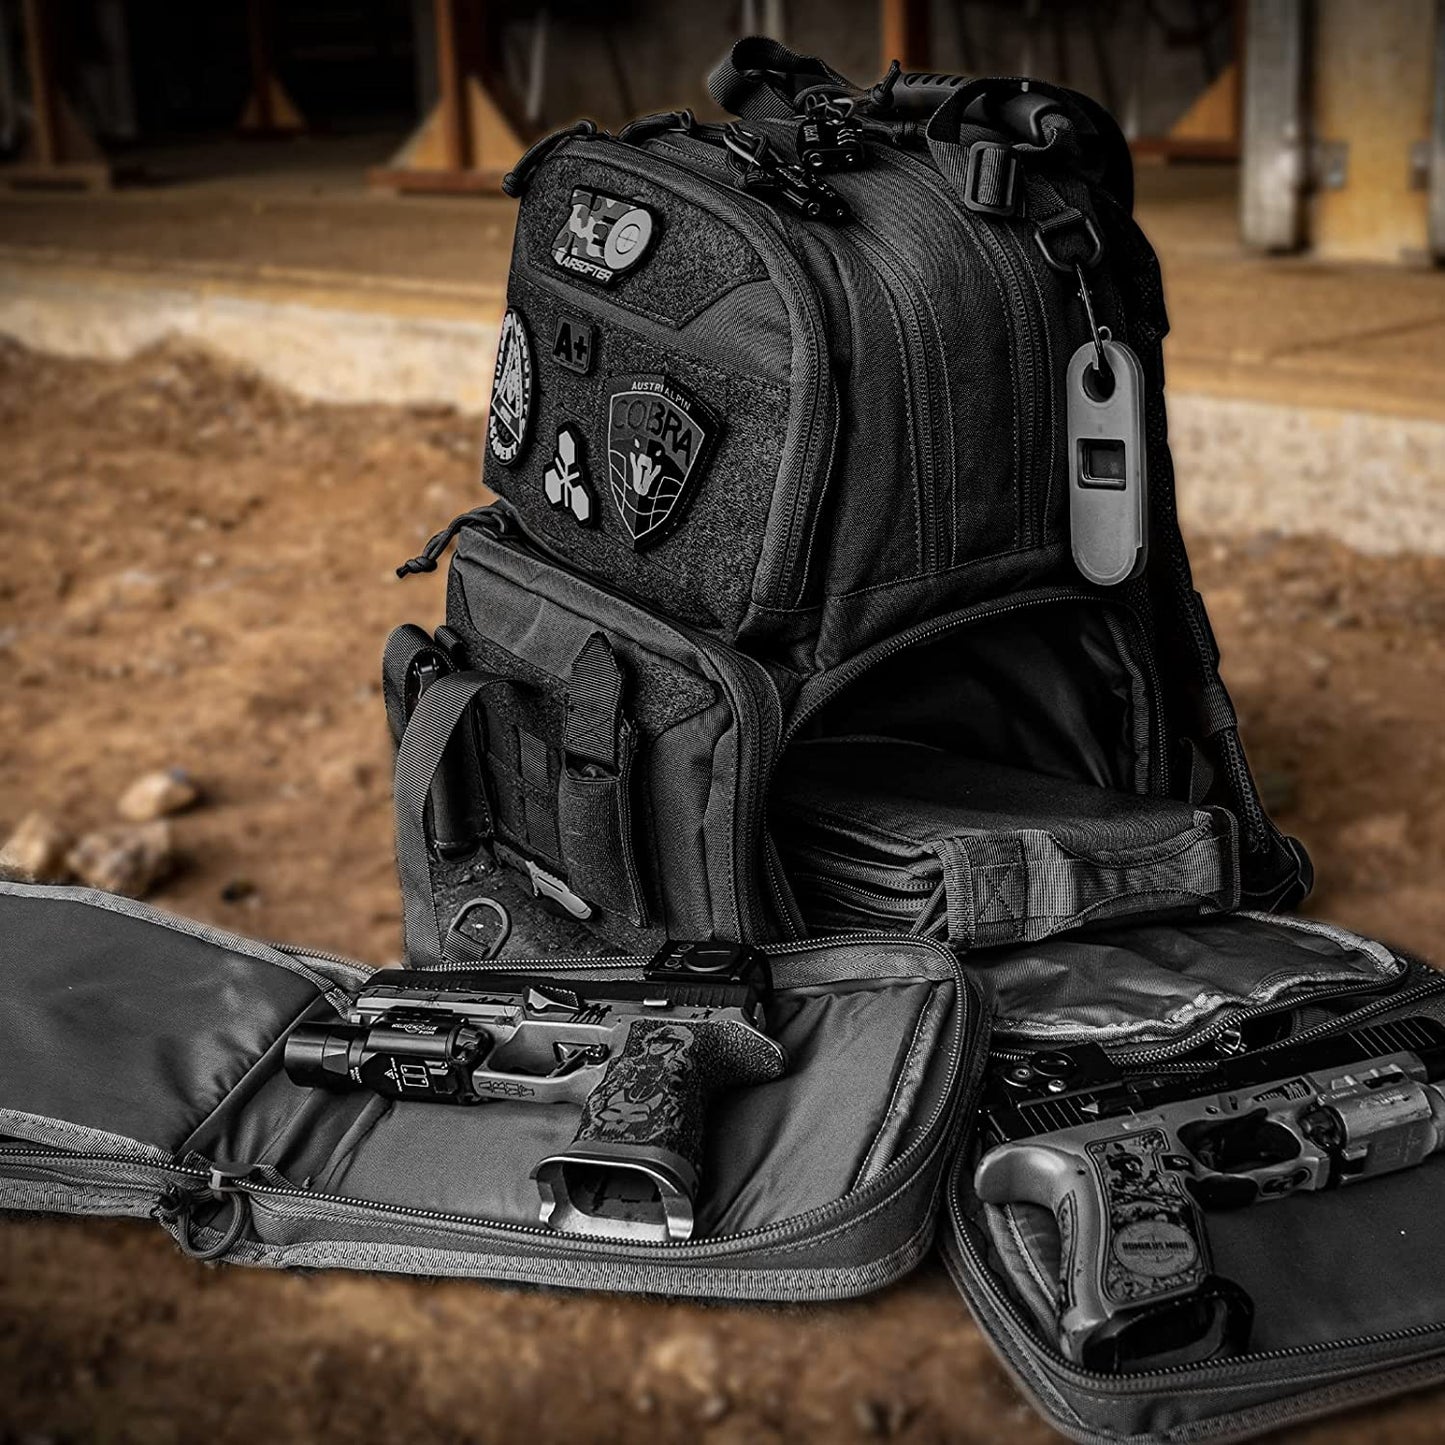 Tactical Range Backpack Bag, Range Bag for Handgun and Ammo, 3 Pistol Carrying Case For Hunting Shooting